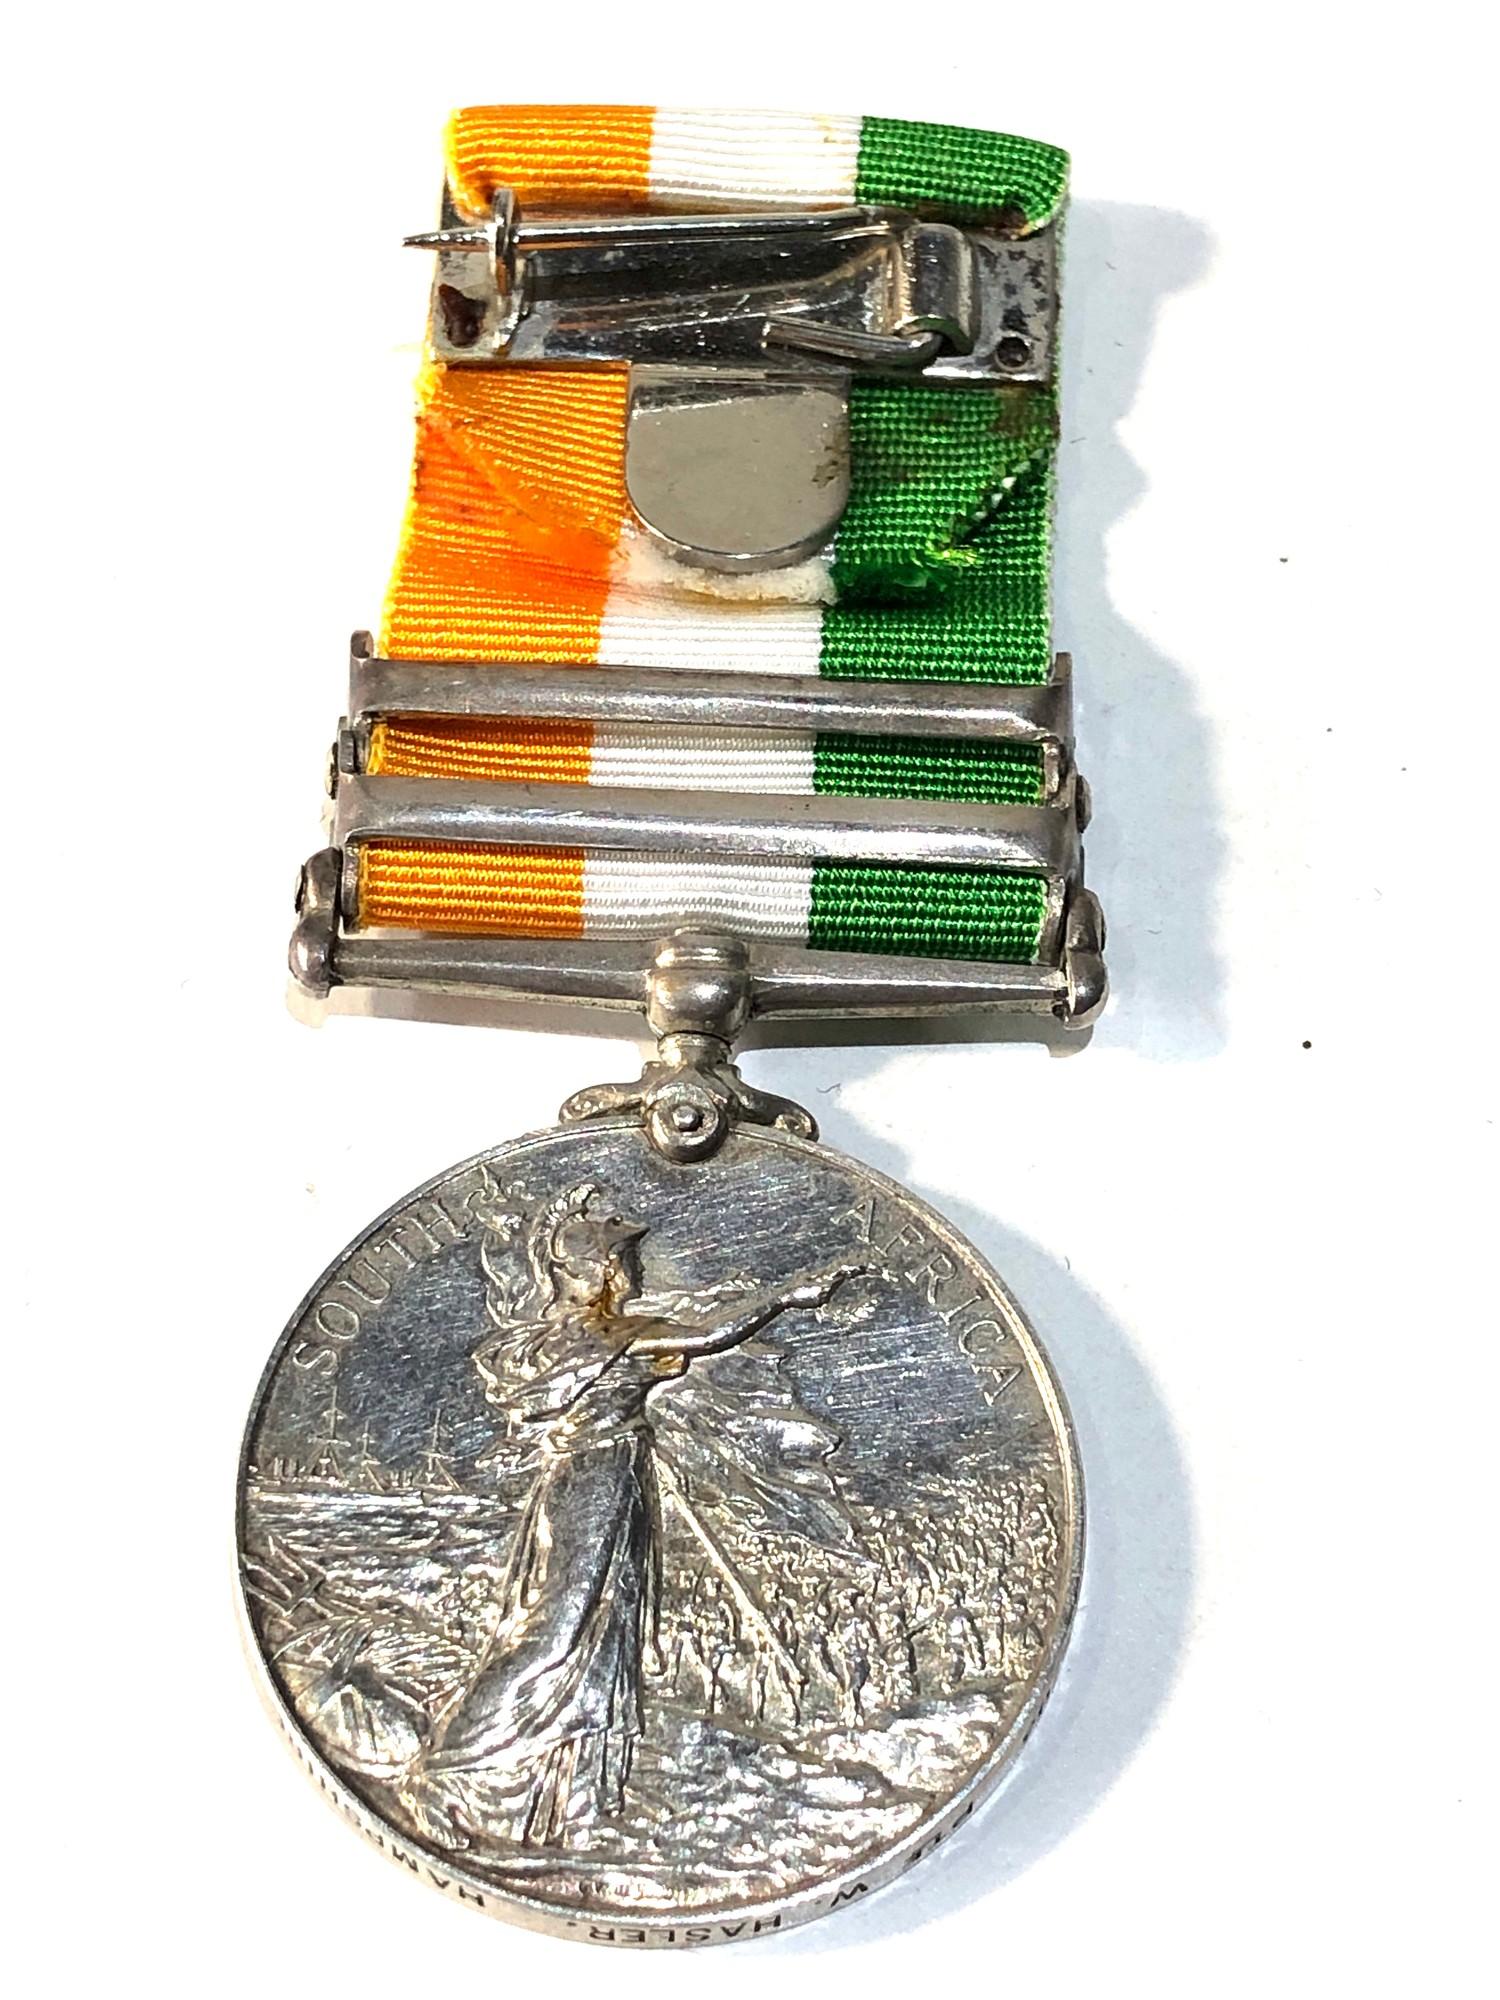 Boer war kings south africa medal to 2703 pte w hasler hampshire regiment - Bild 2 aus 3